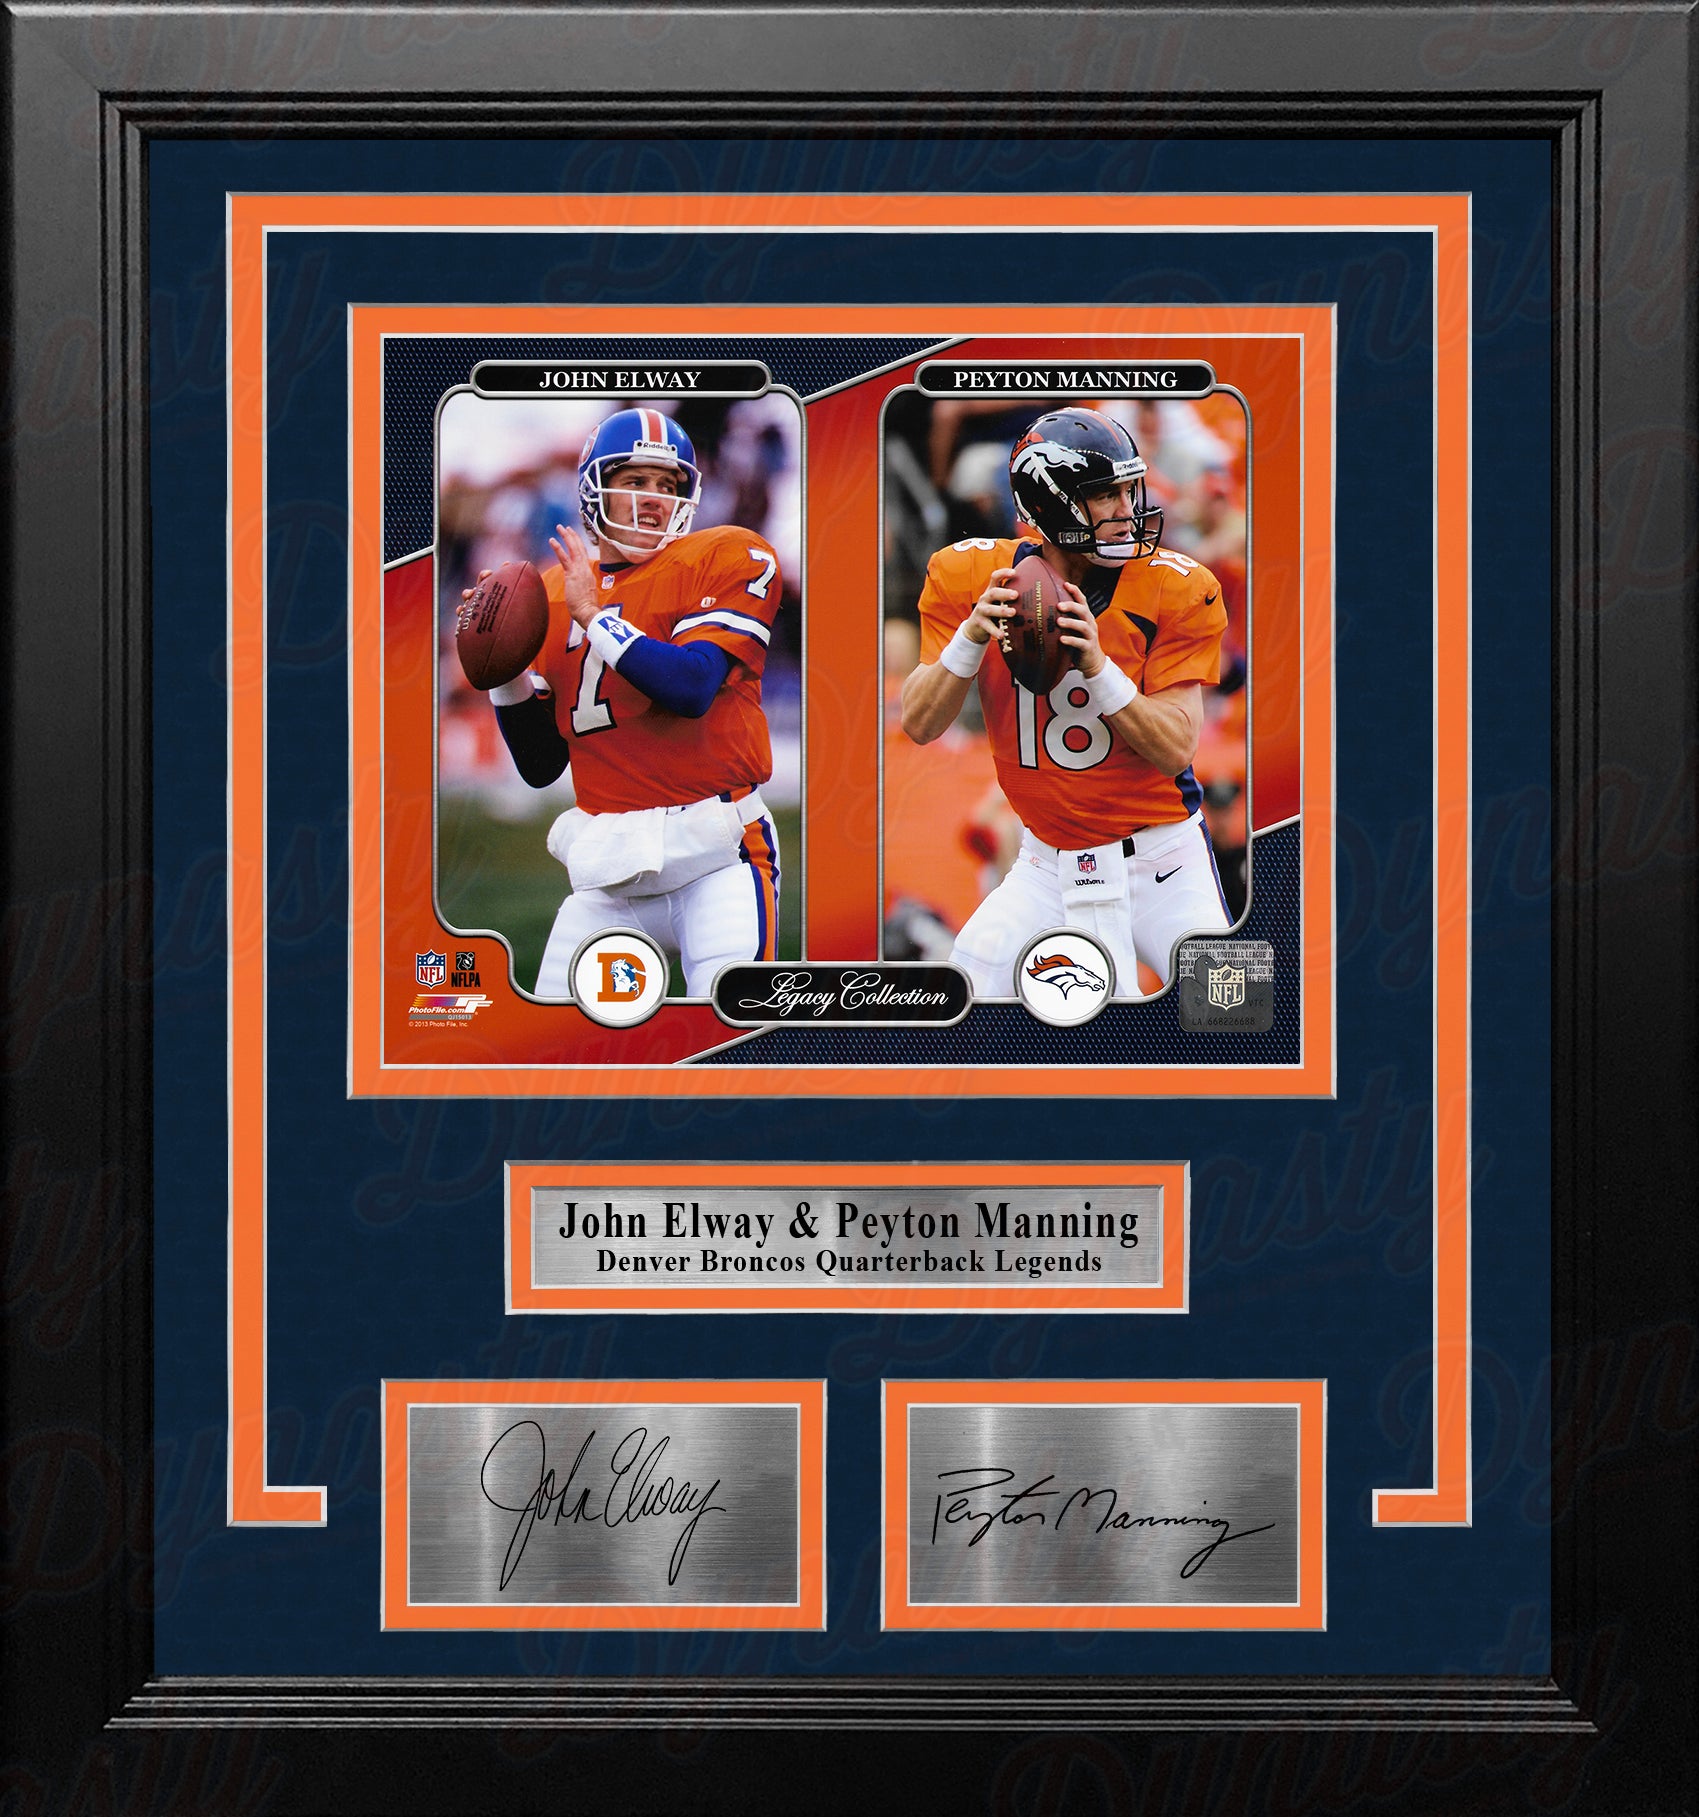 John Elway & Peyton Manning Denver Broncos 8x10 Framed Football Photo with  Engraved Autographs - Dynasty Sports & Framing